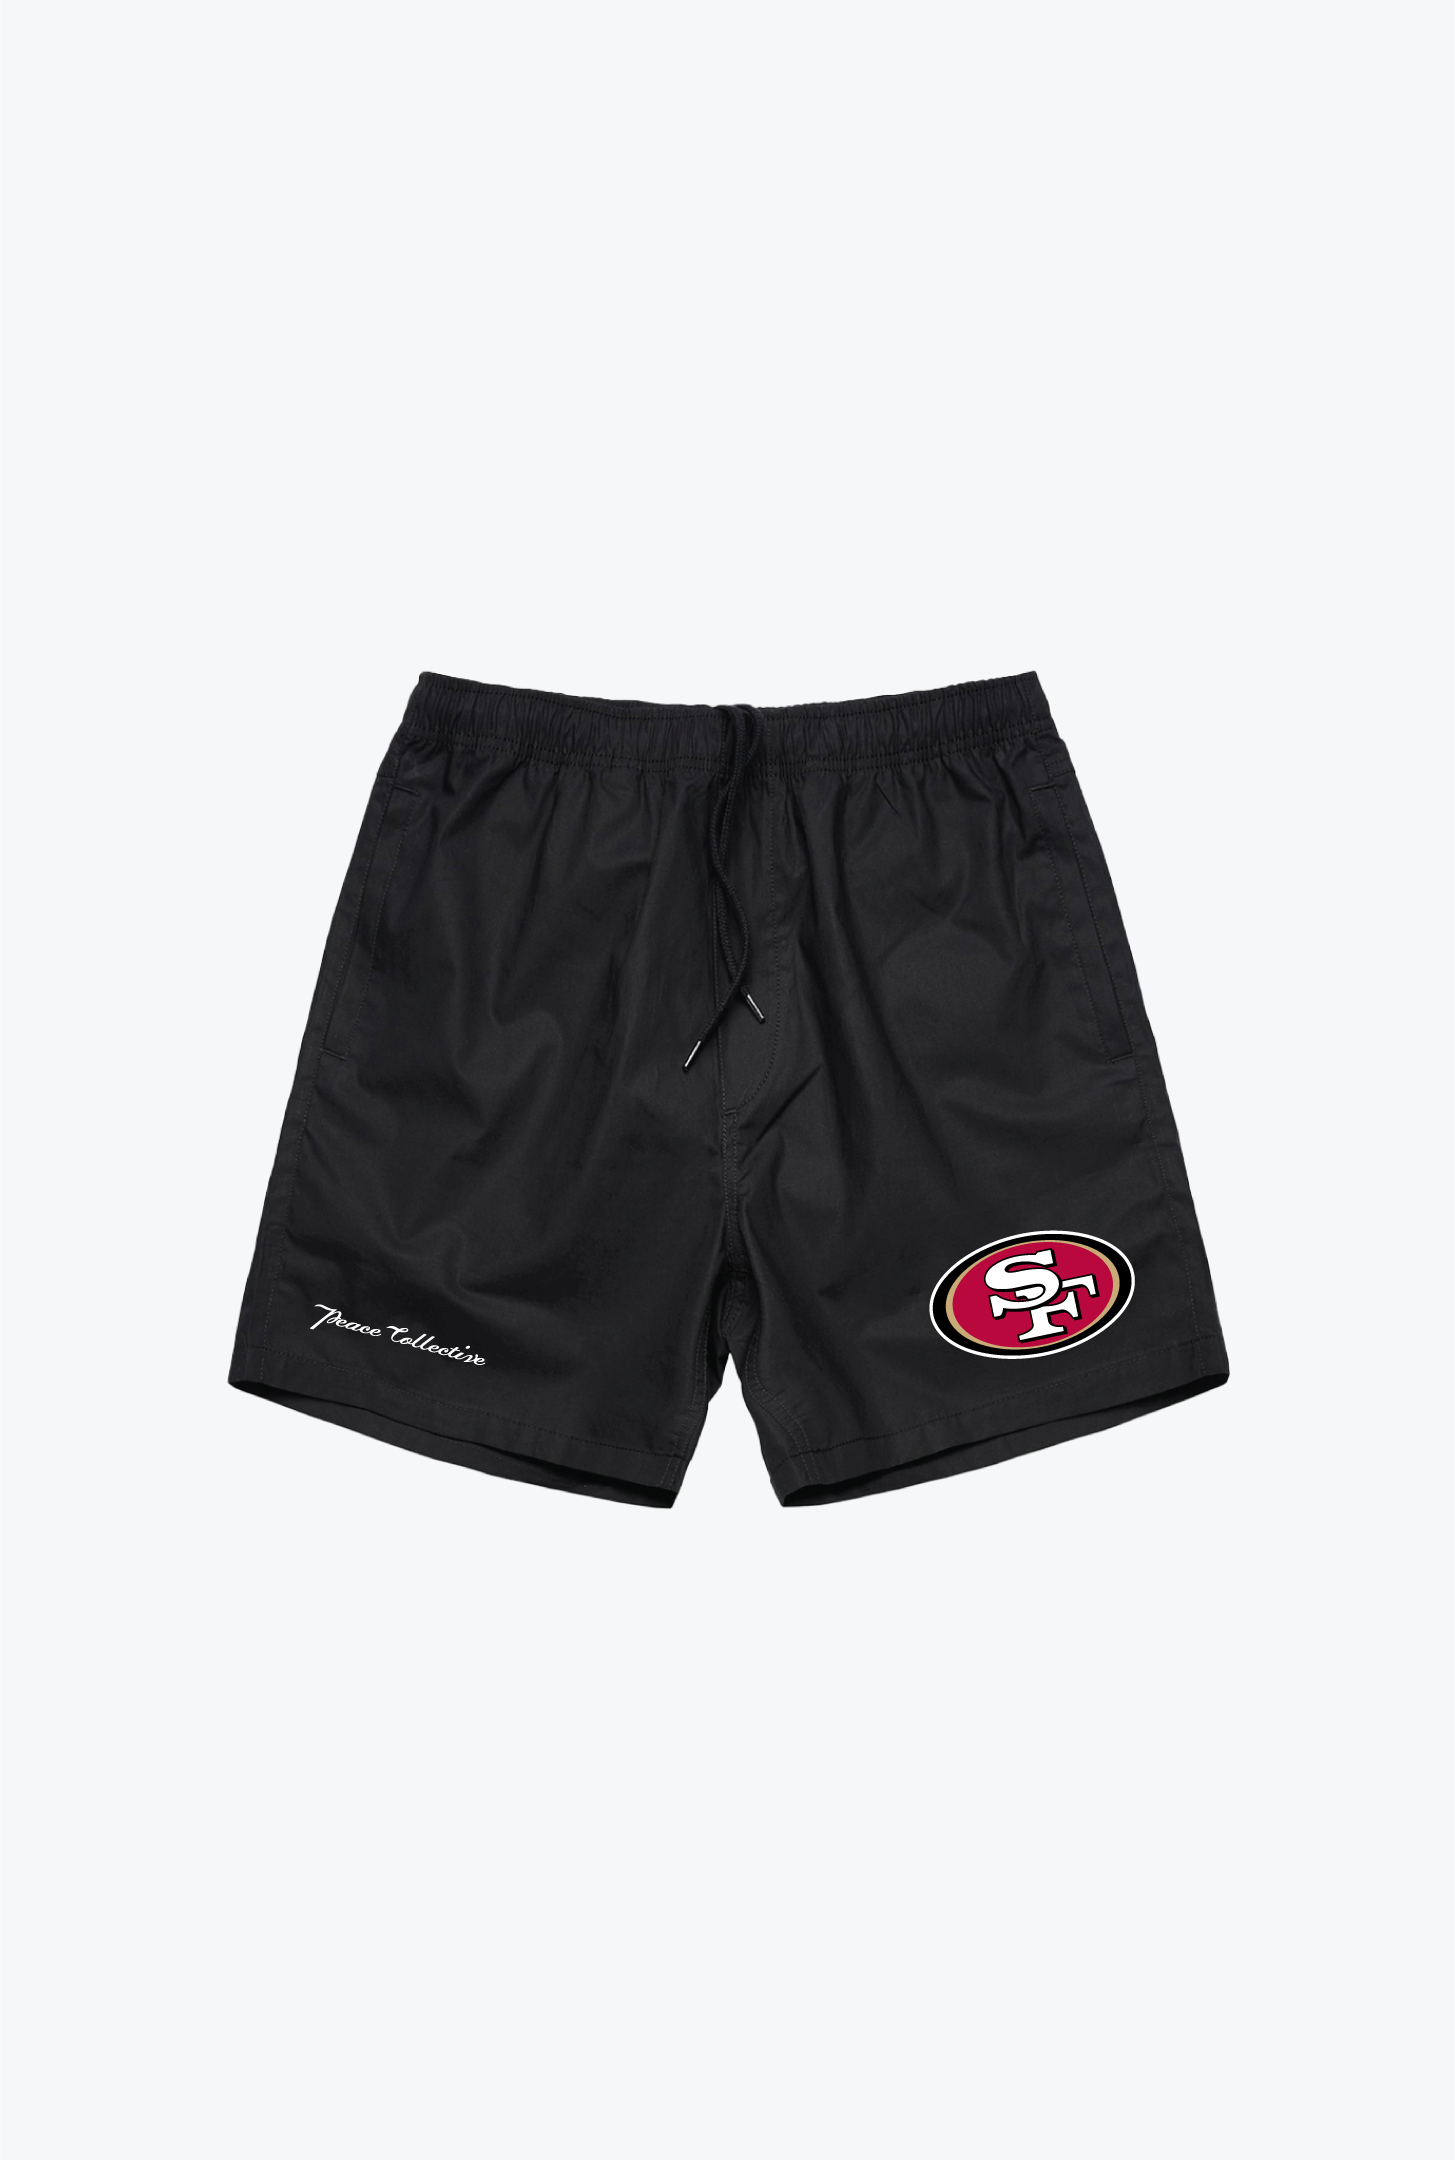 San Francisco 49ers Board Shorts - Black